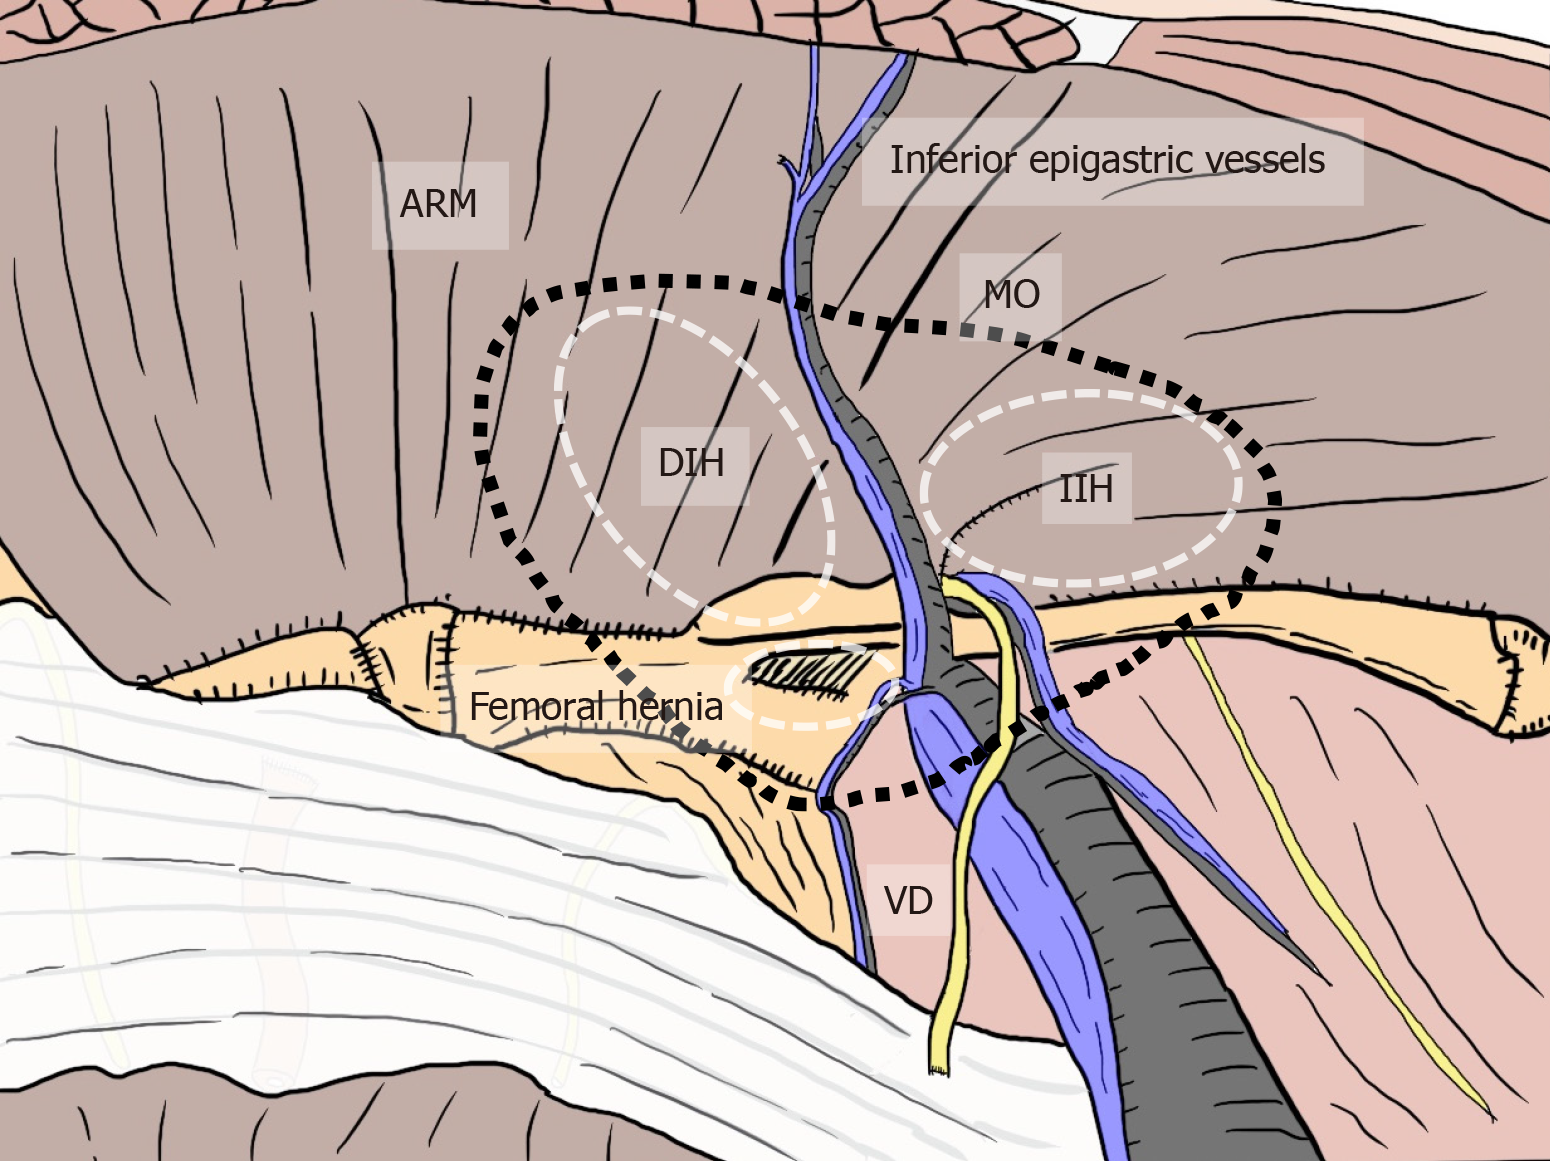 Direct Inguinal Hernia Anatomy